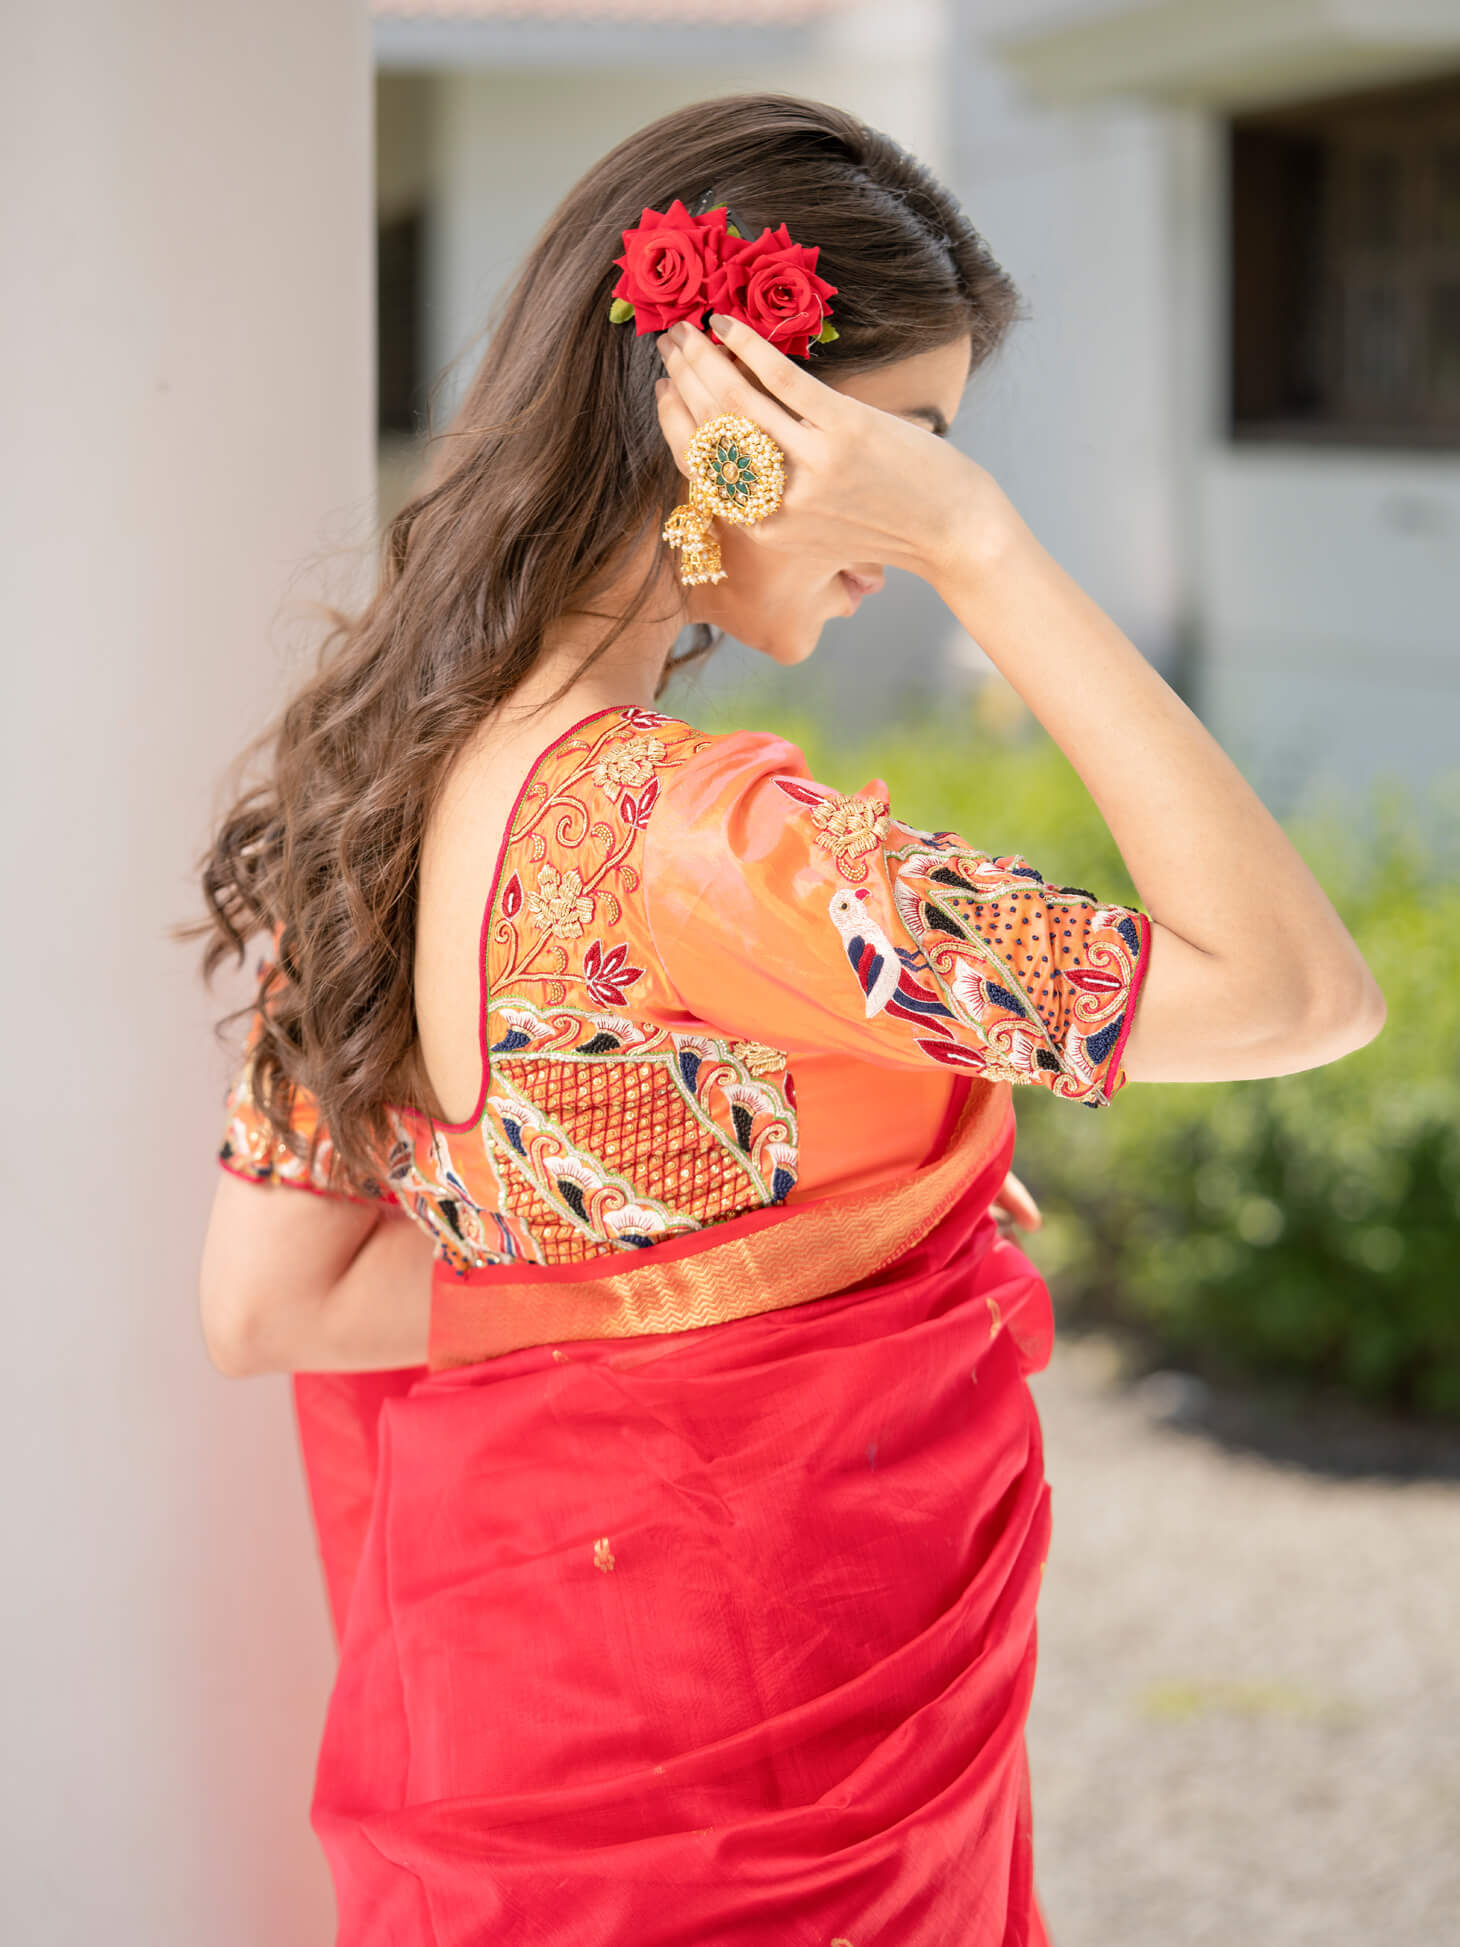 Women's Red, Gold Color Ojaswi - Maheshwari Handloom Silk Saree - Maahishmati